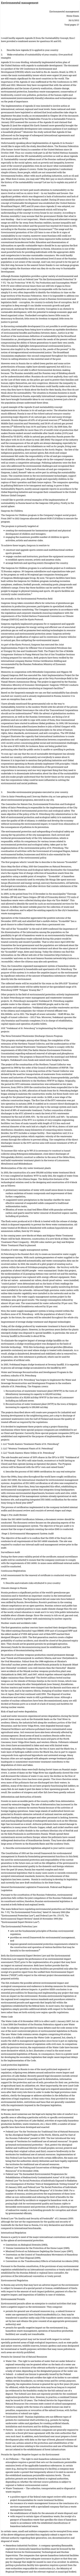 Environmental management